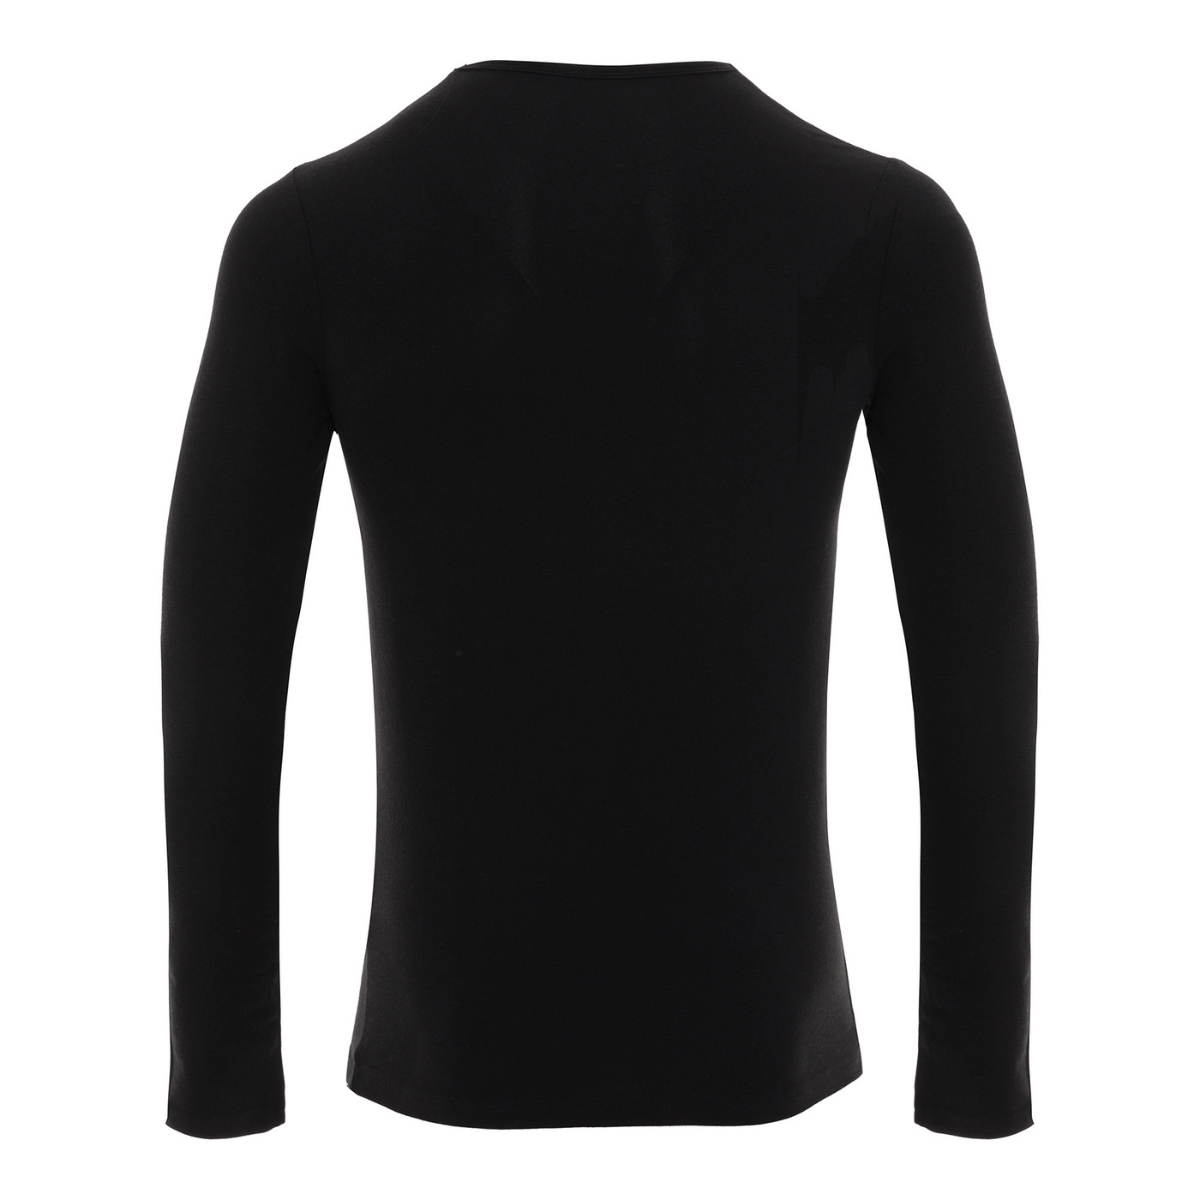 BOXR | Bamboo T-Shirt Longsleeve 4-Pack Black